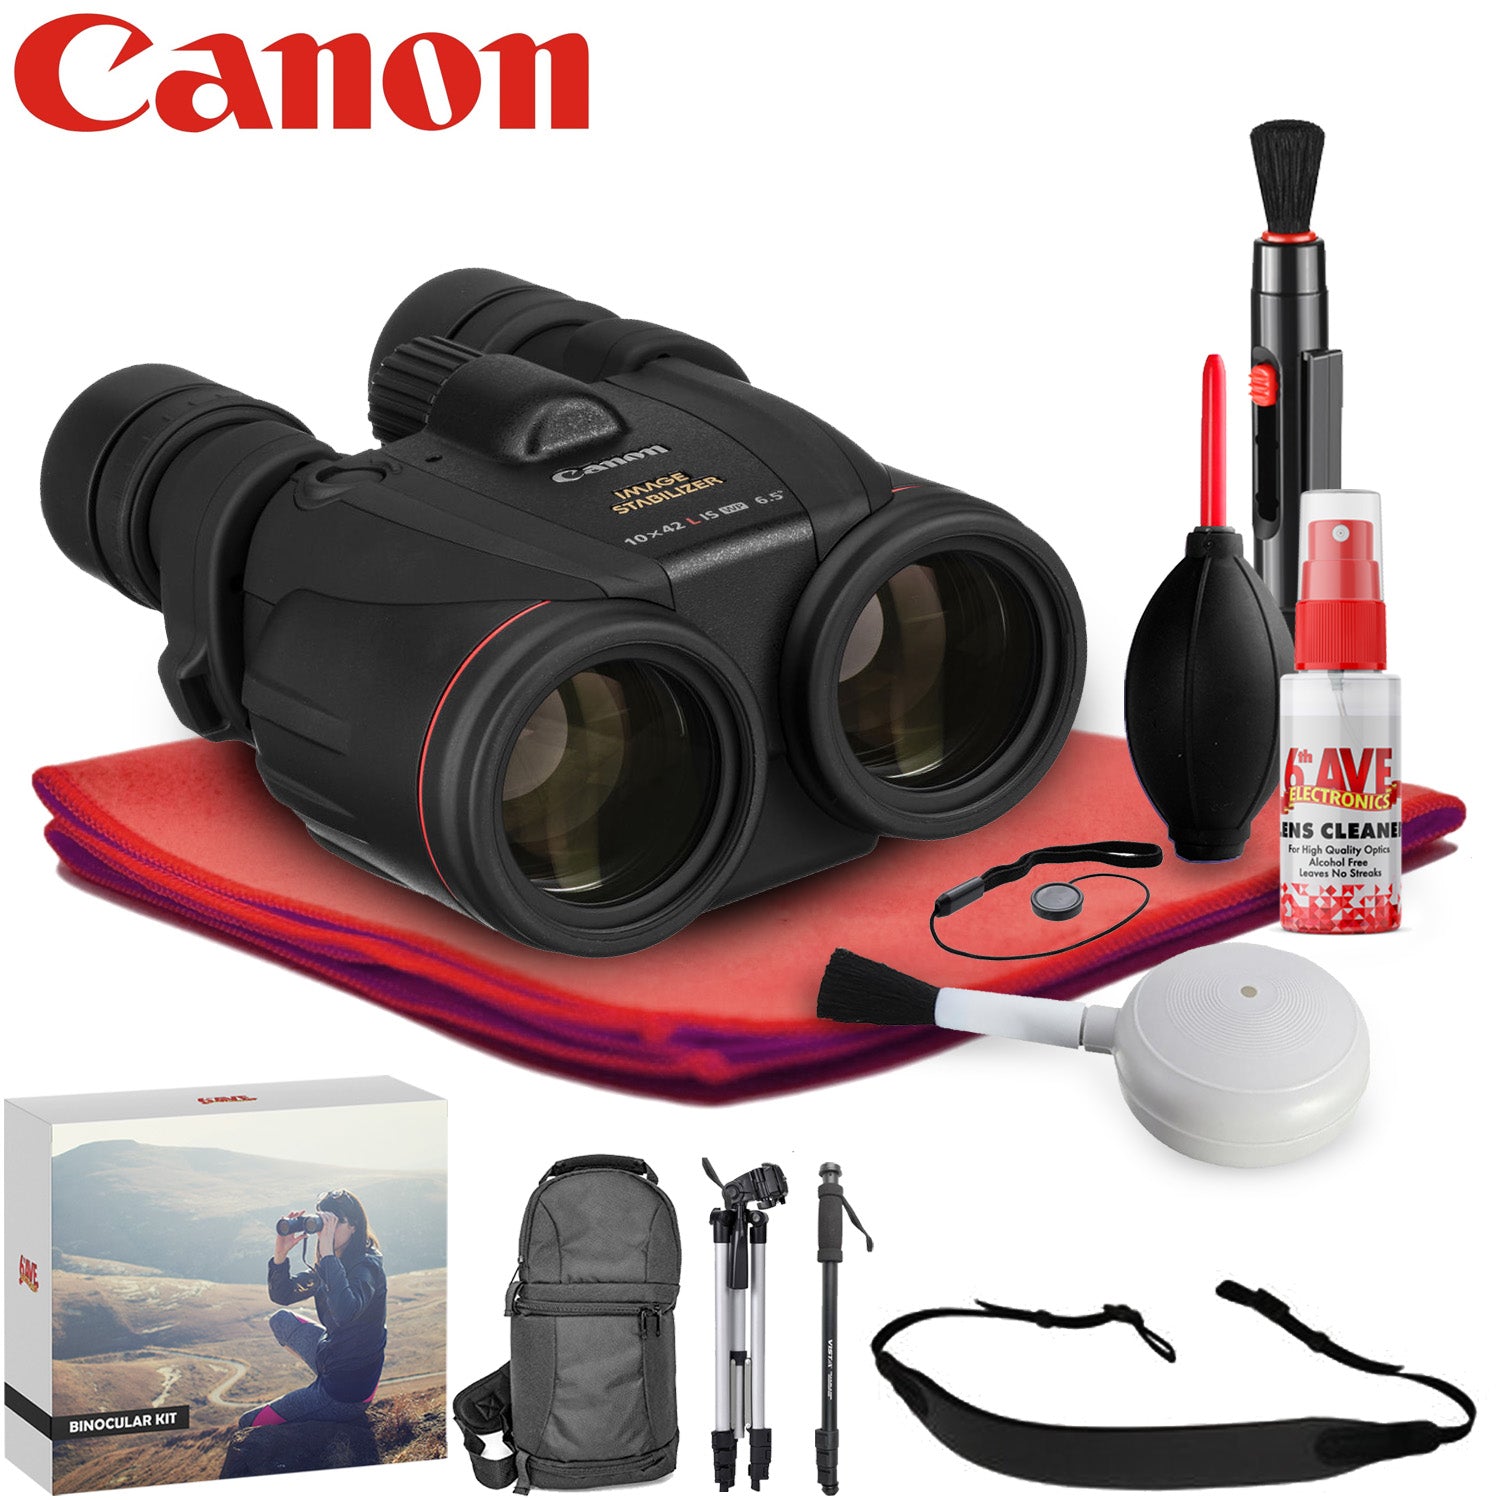 Canon 10x42 L IS WP Image Stabilized Binocular  - Exclusive Outdoors Binoculars Kit